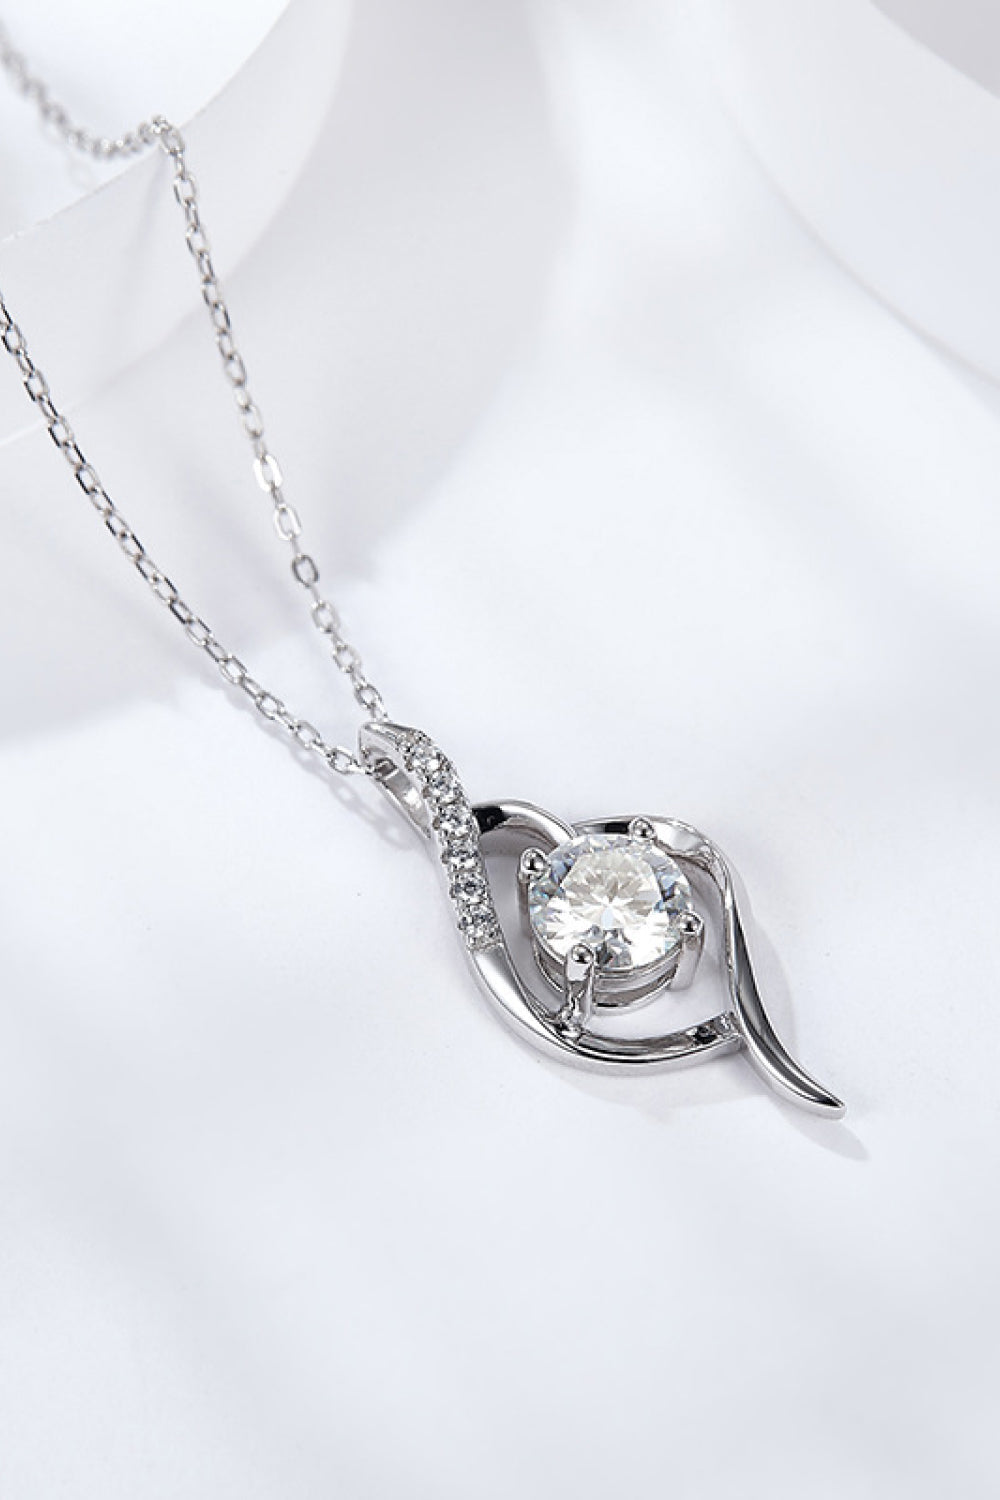 Platinum-Plated 1 Carat Moissanite Pendant Necklace - Necklaces - FITGGINS